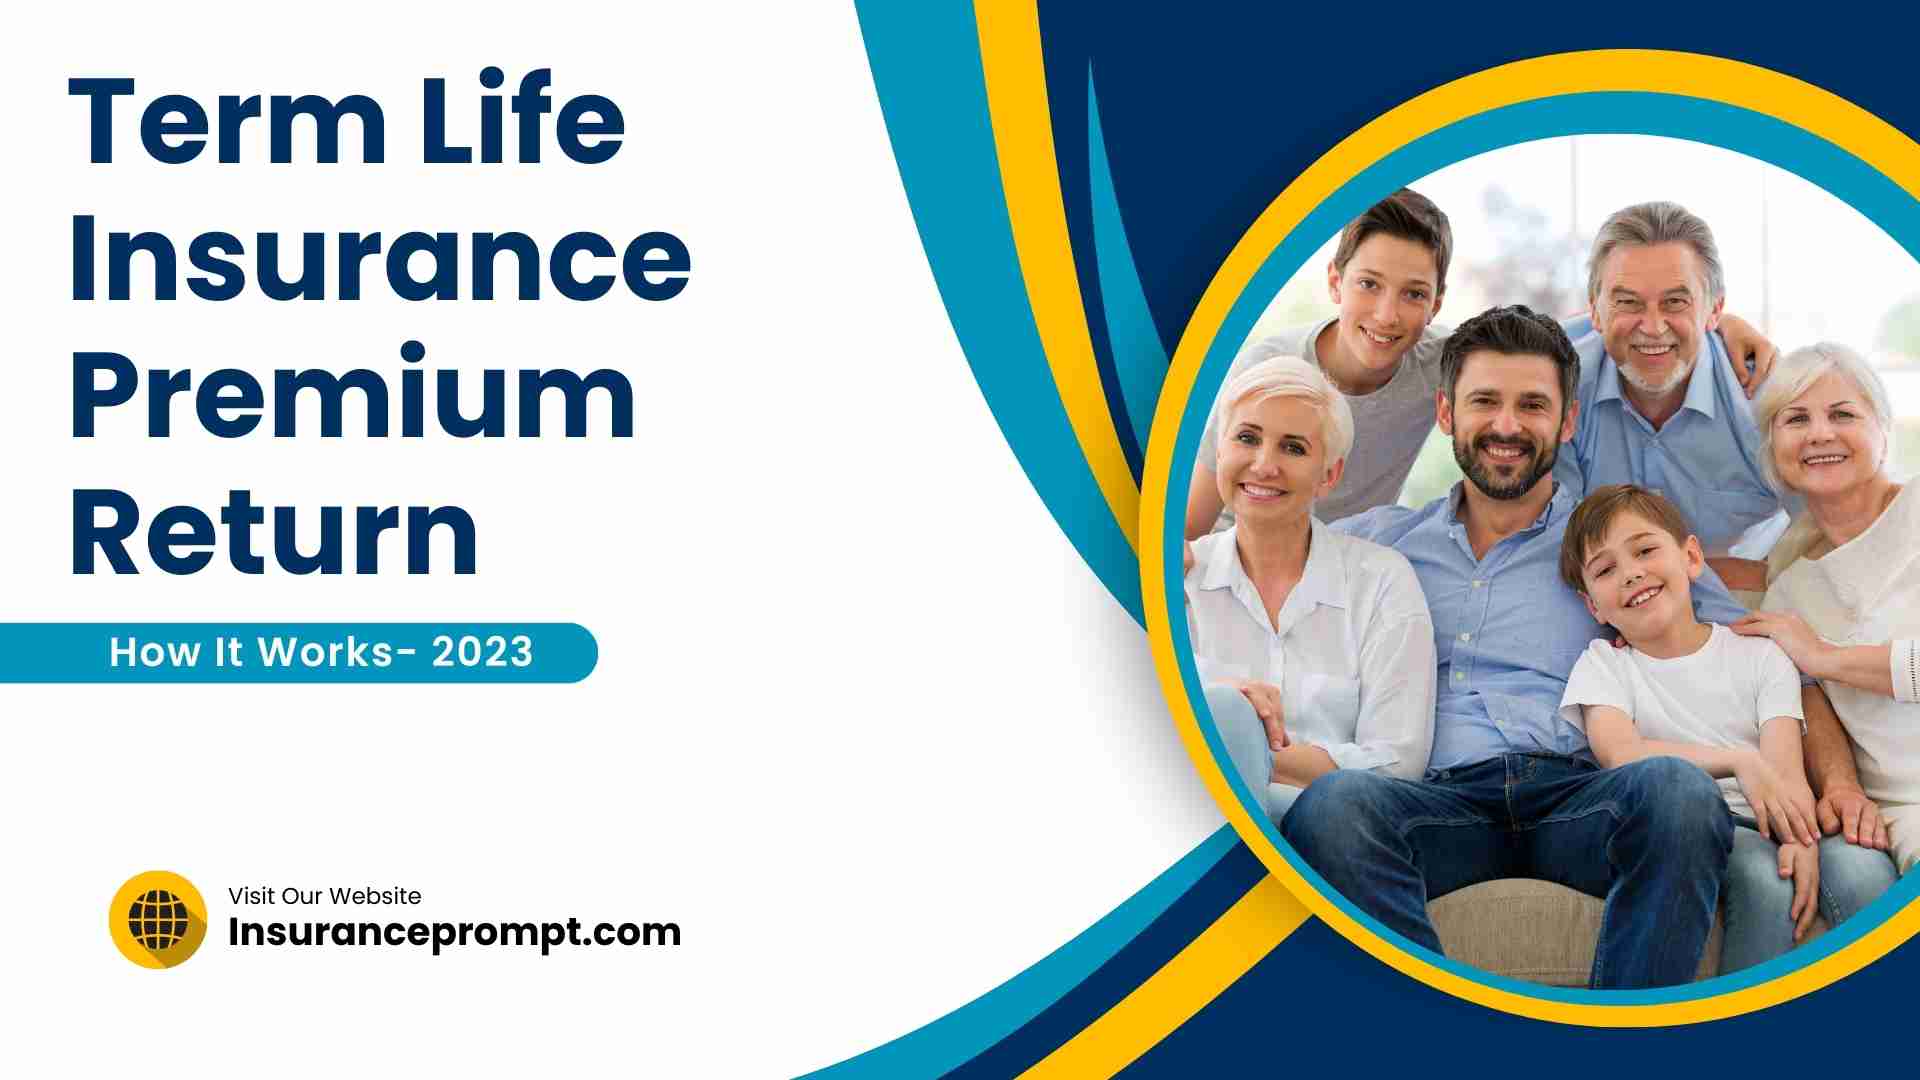 Term Life Insurance Premium Return- How It Works in 2023